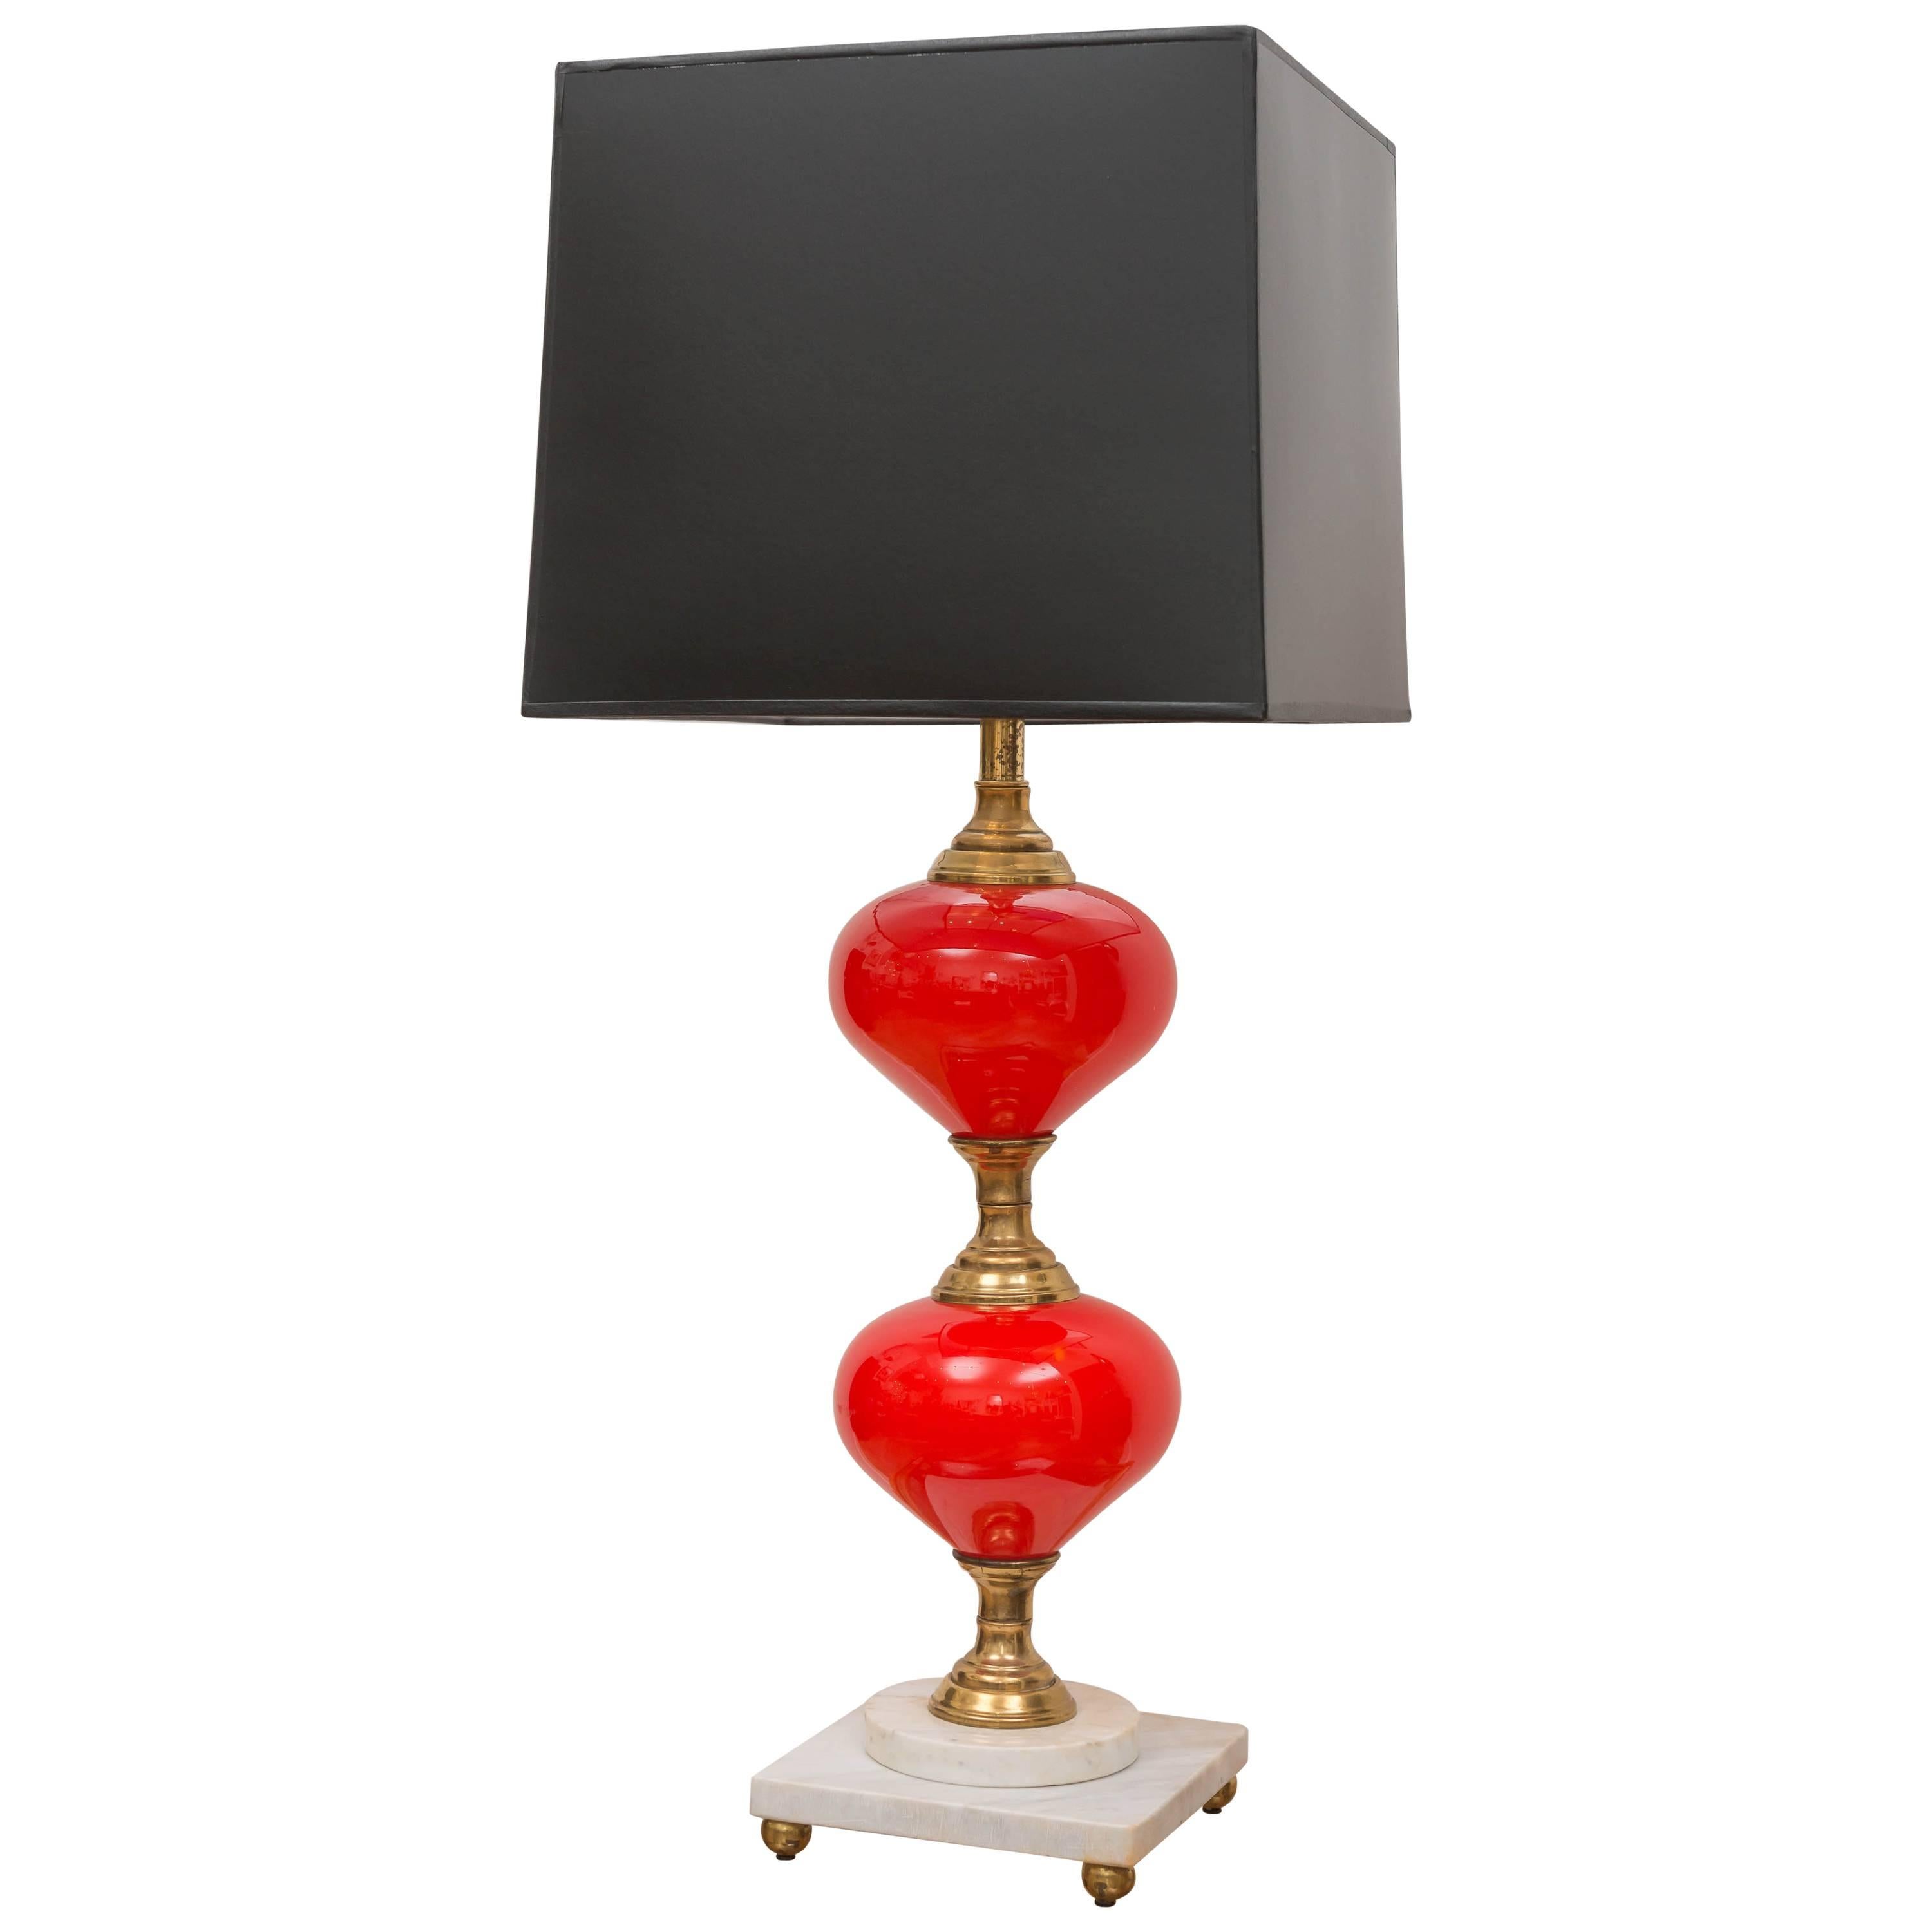 1960s Italian Lamp For Sale